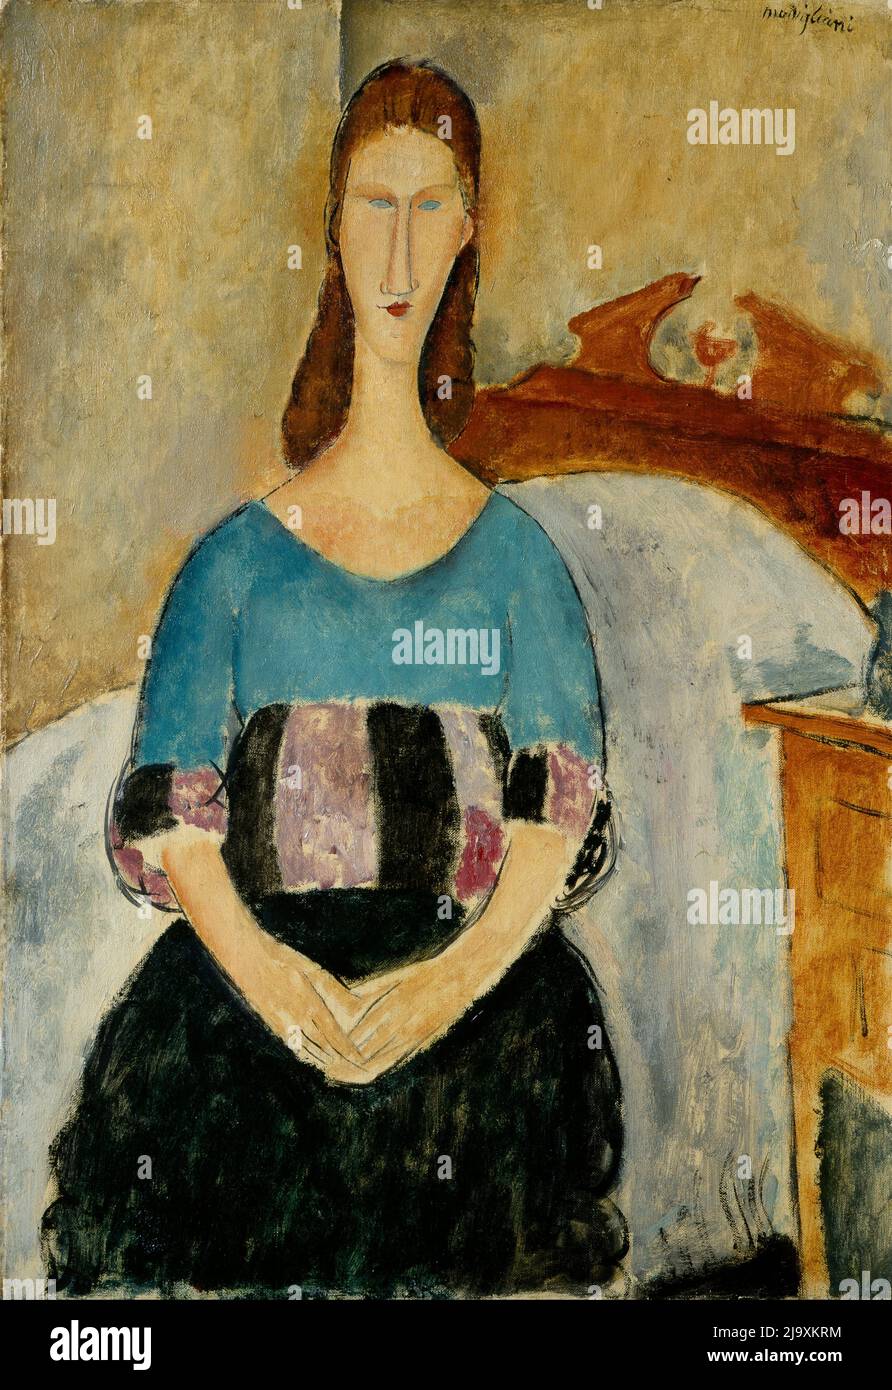 Title: Portrait of Jeanne Hebuterne, Seated Creator: Amedeo Modigliani Date: 1918 Dimensions: 55 x 38 cm Medium: Oil on canvas Location:  The Israel Museum, Jerusalem, Stock Photo